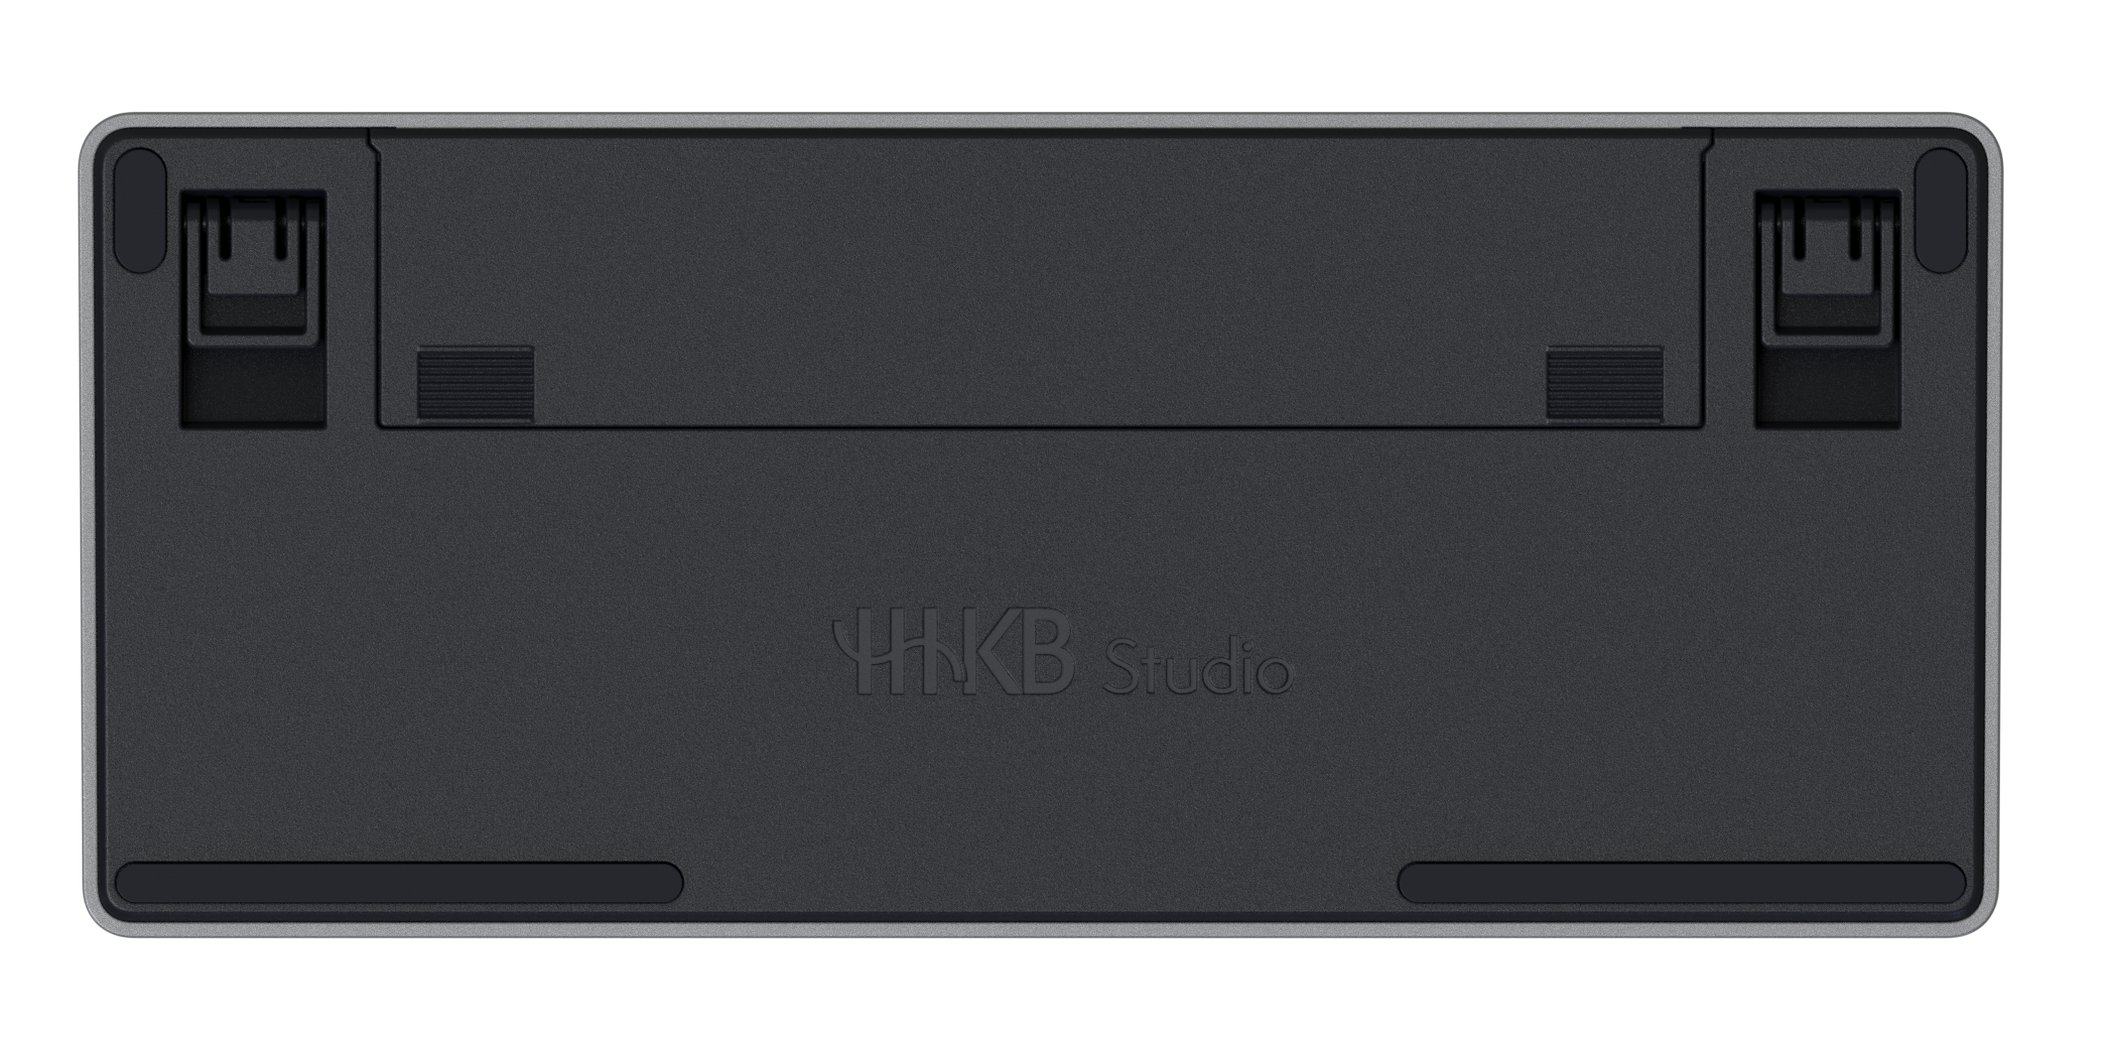 HHKB Studio Charcoal 60% Hotswap Bluetooth Dye Sub PBT Mechanical Keyboard MKWJRD6U2O |59541|